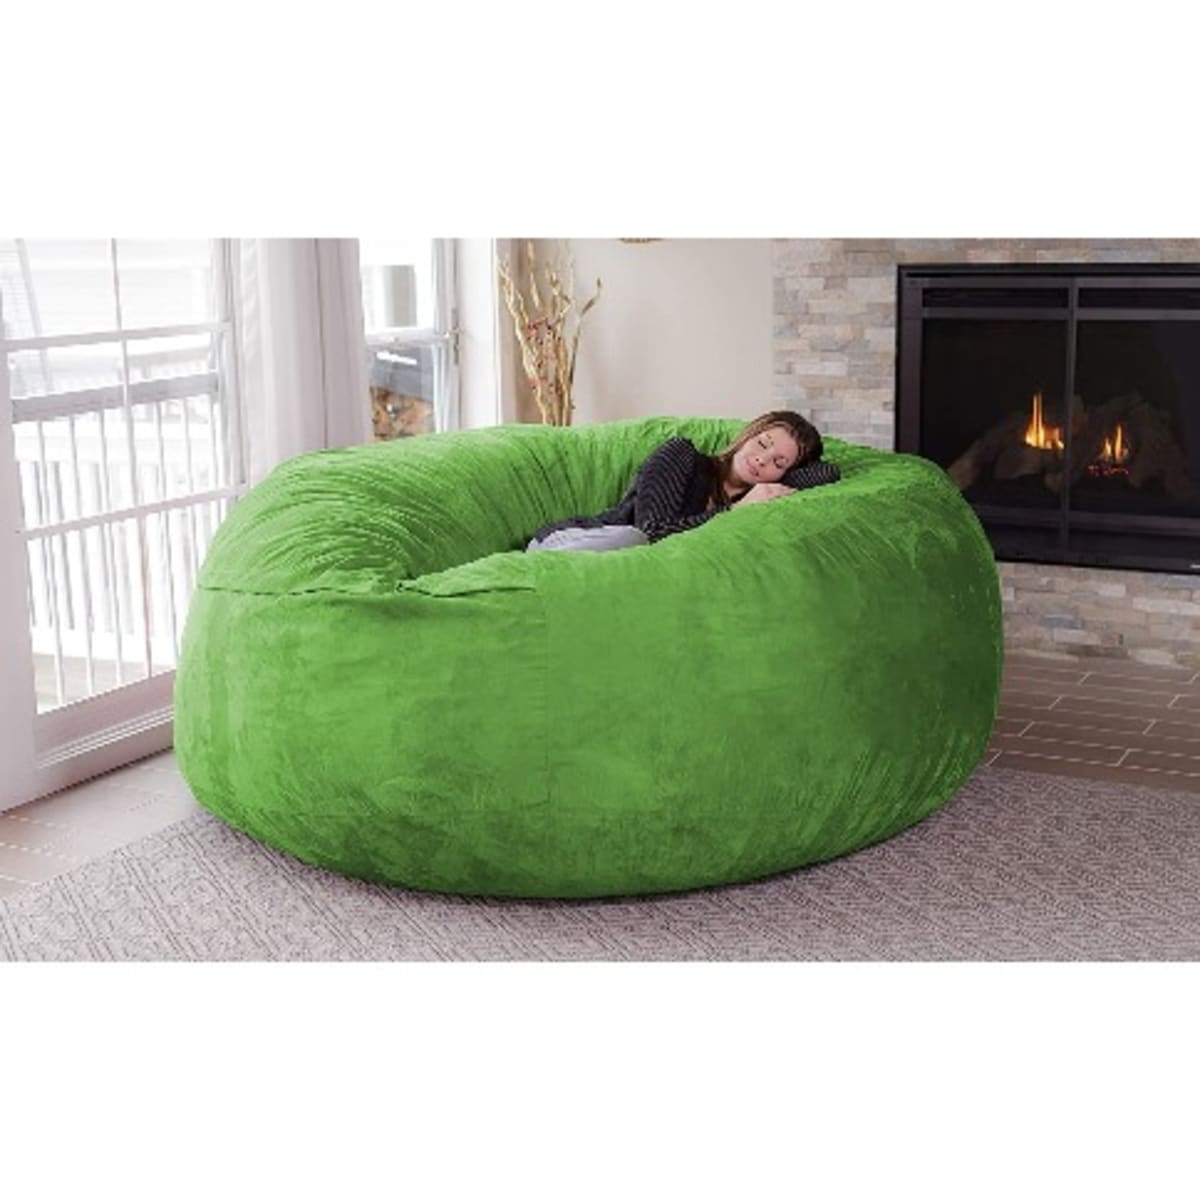 Giant Bean Bag Bed - Green